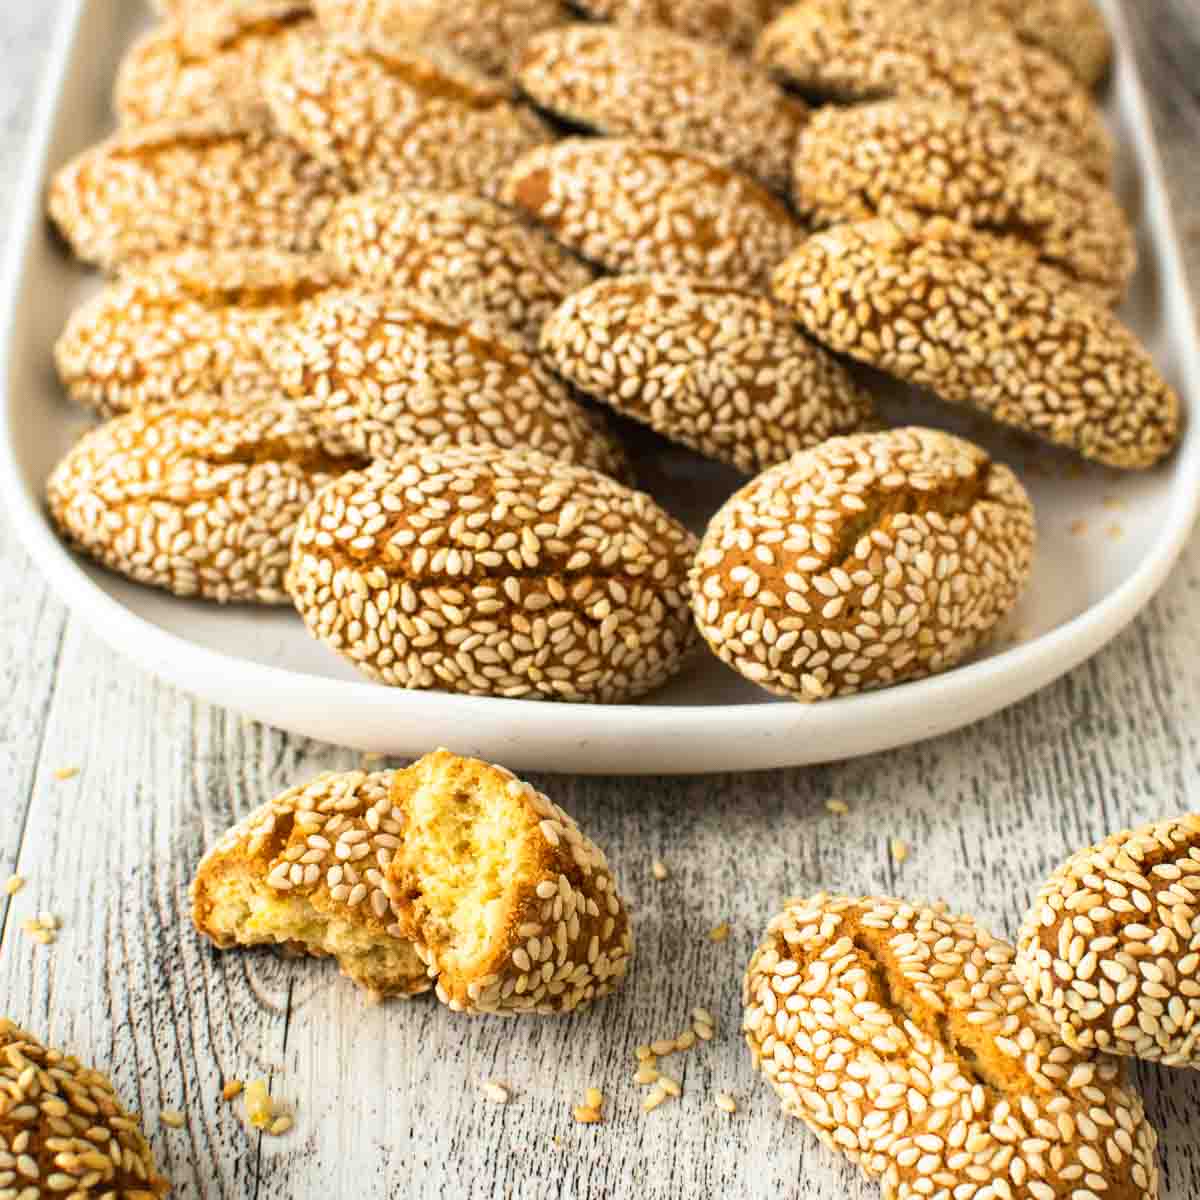 Italian Sesame Cookies